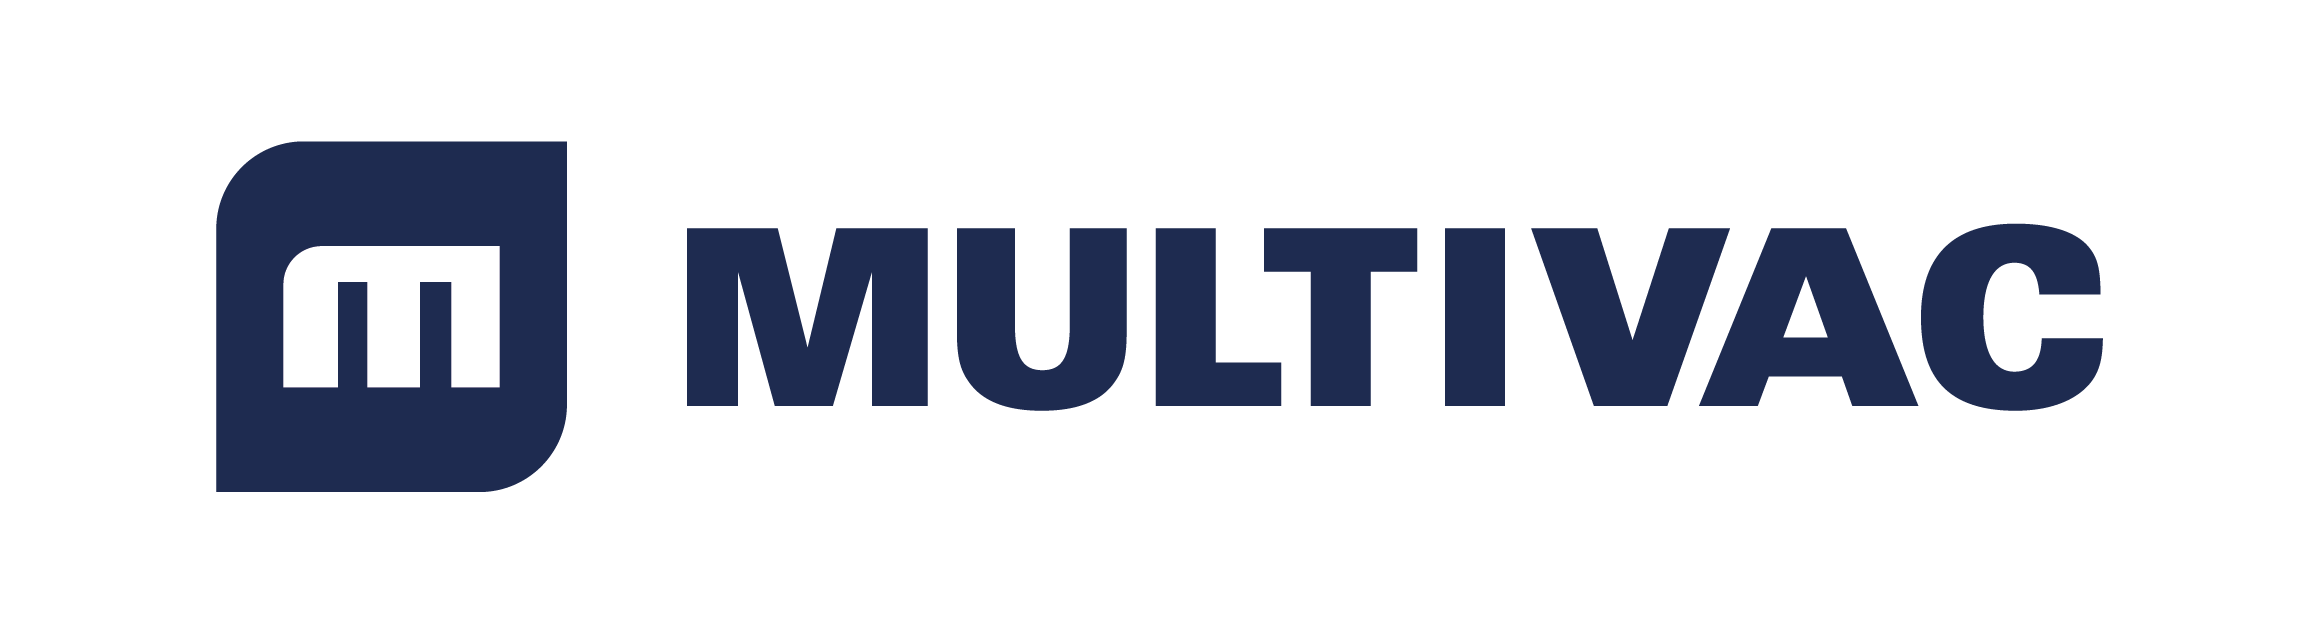 Multivac Sepp Haggenmüller GmbH & Co. KG